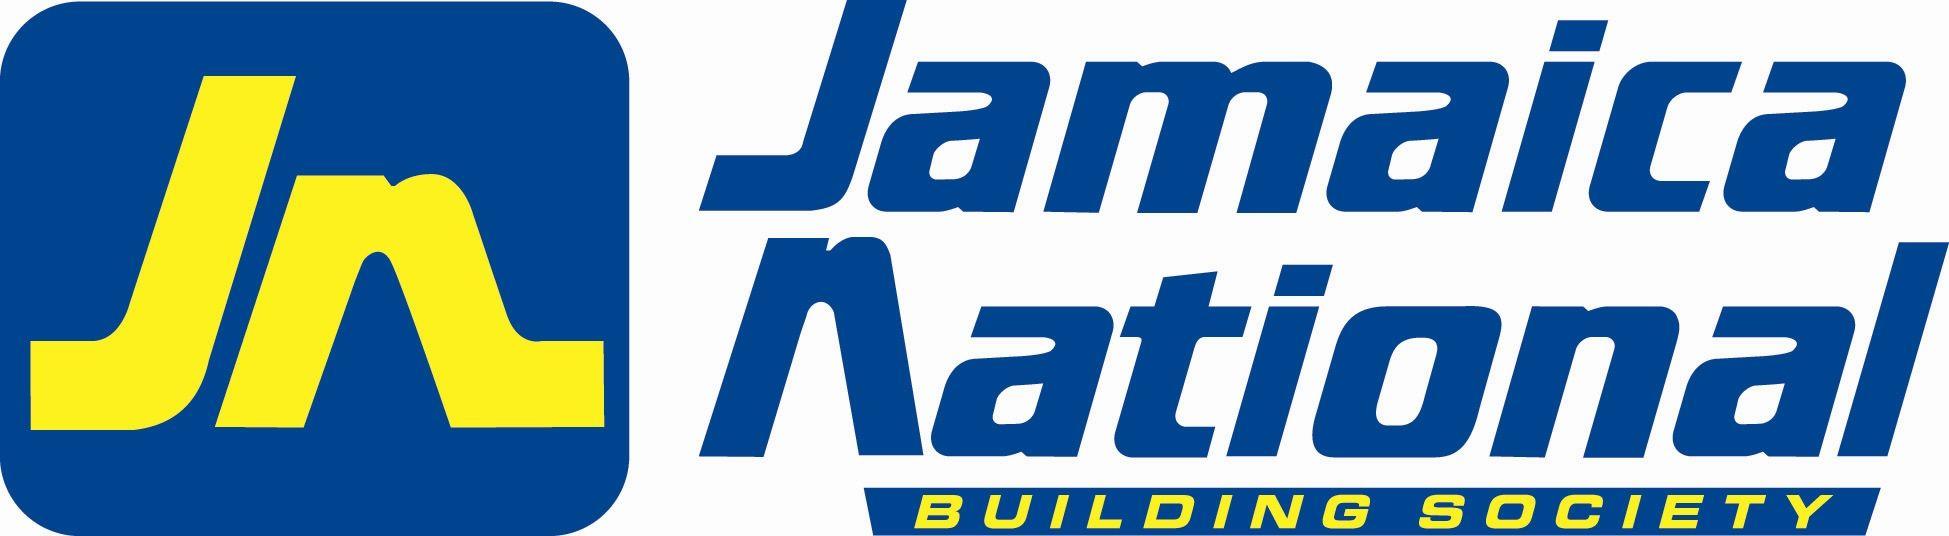 Jamaican Banking Logo - Jamaica Cancer Society - Home